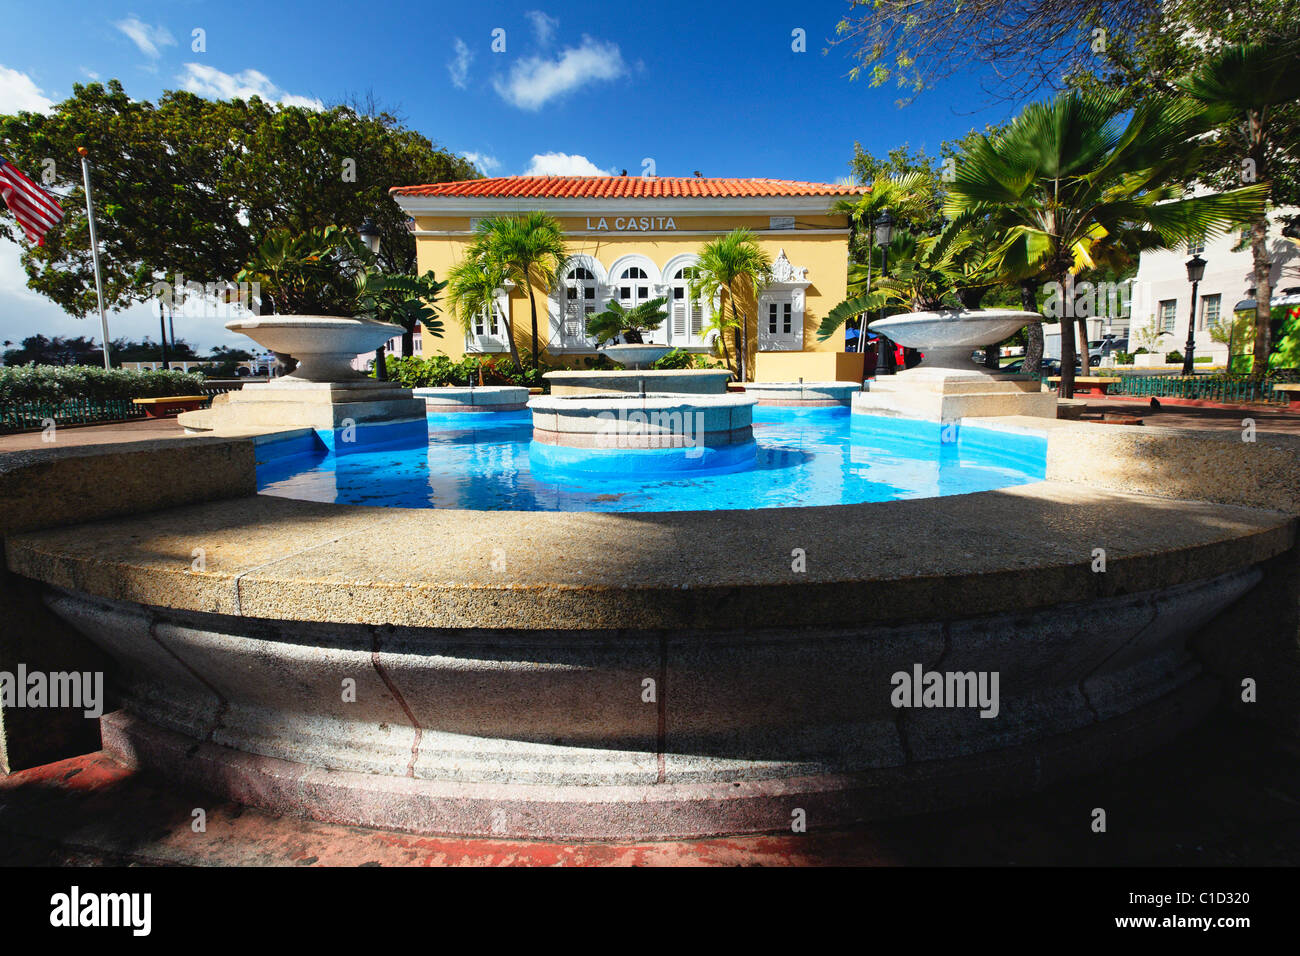 La Casita Tourist Information Center Building in San Juan Harbor, Puerto Rico Stock Photo